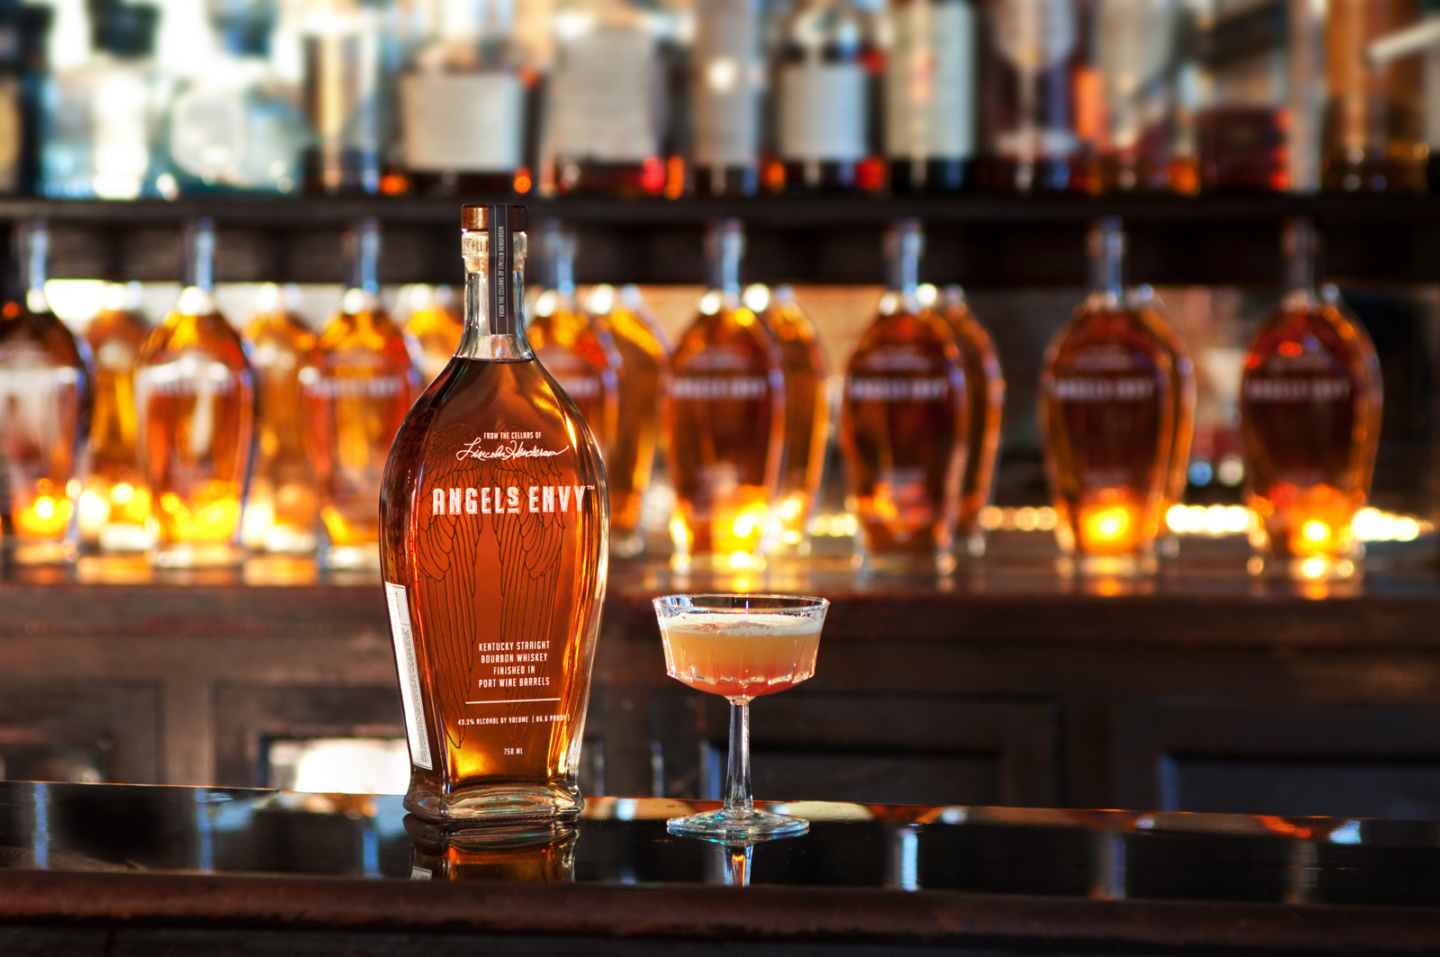 Angels Envy Bourbon Whisky gentlemens journey